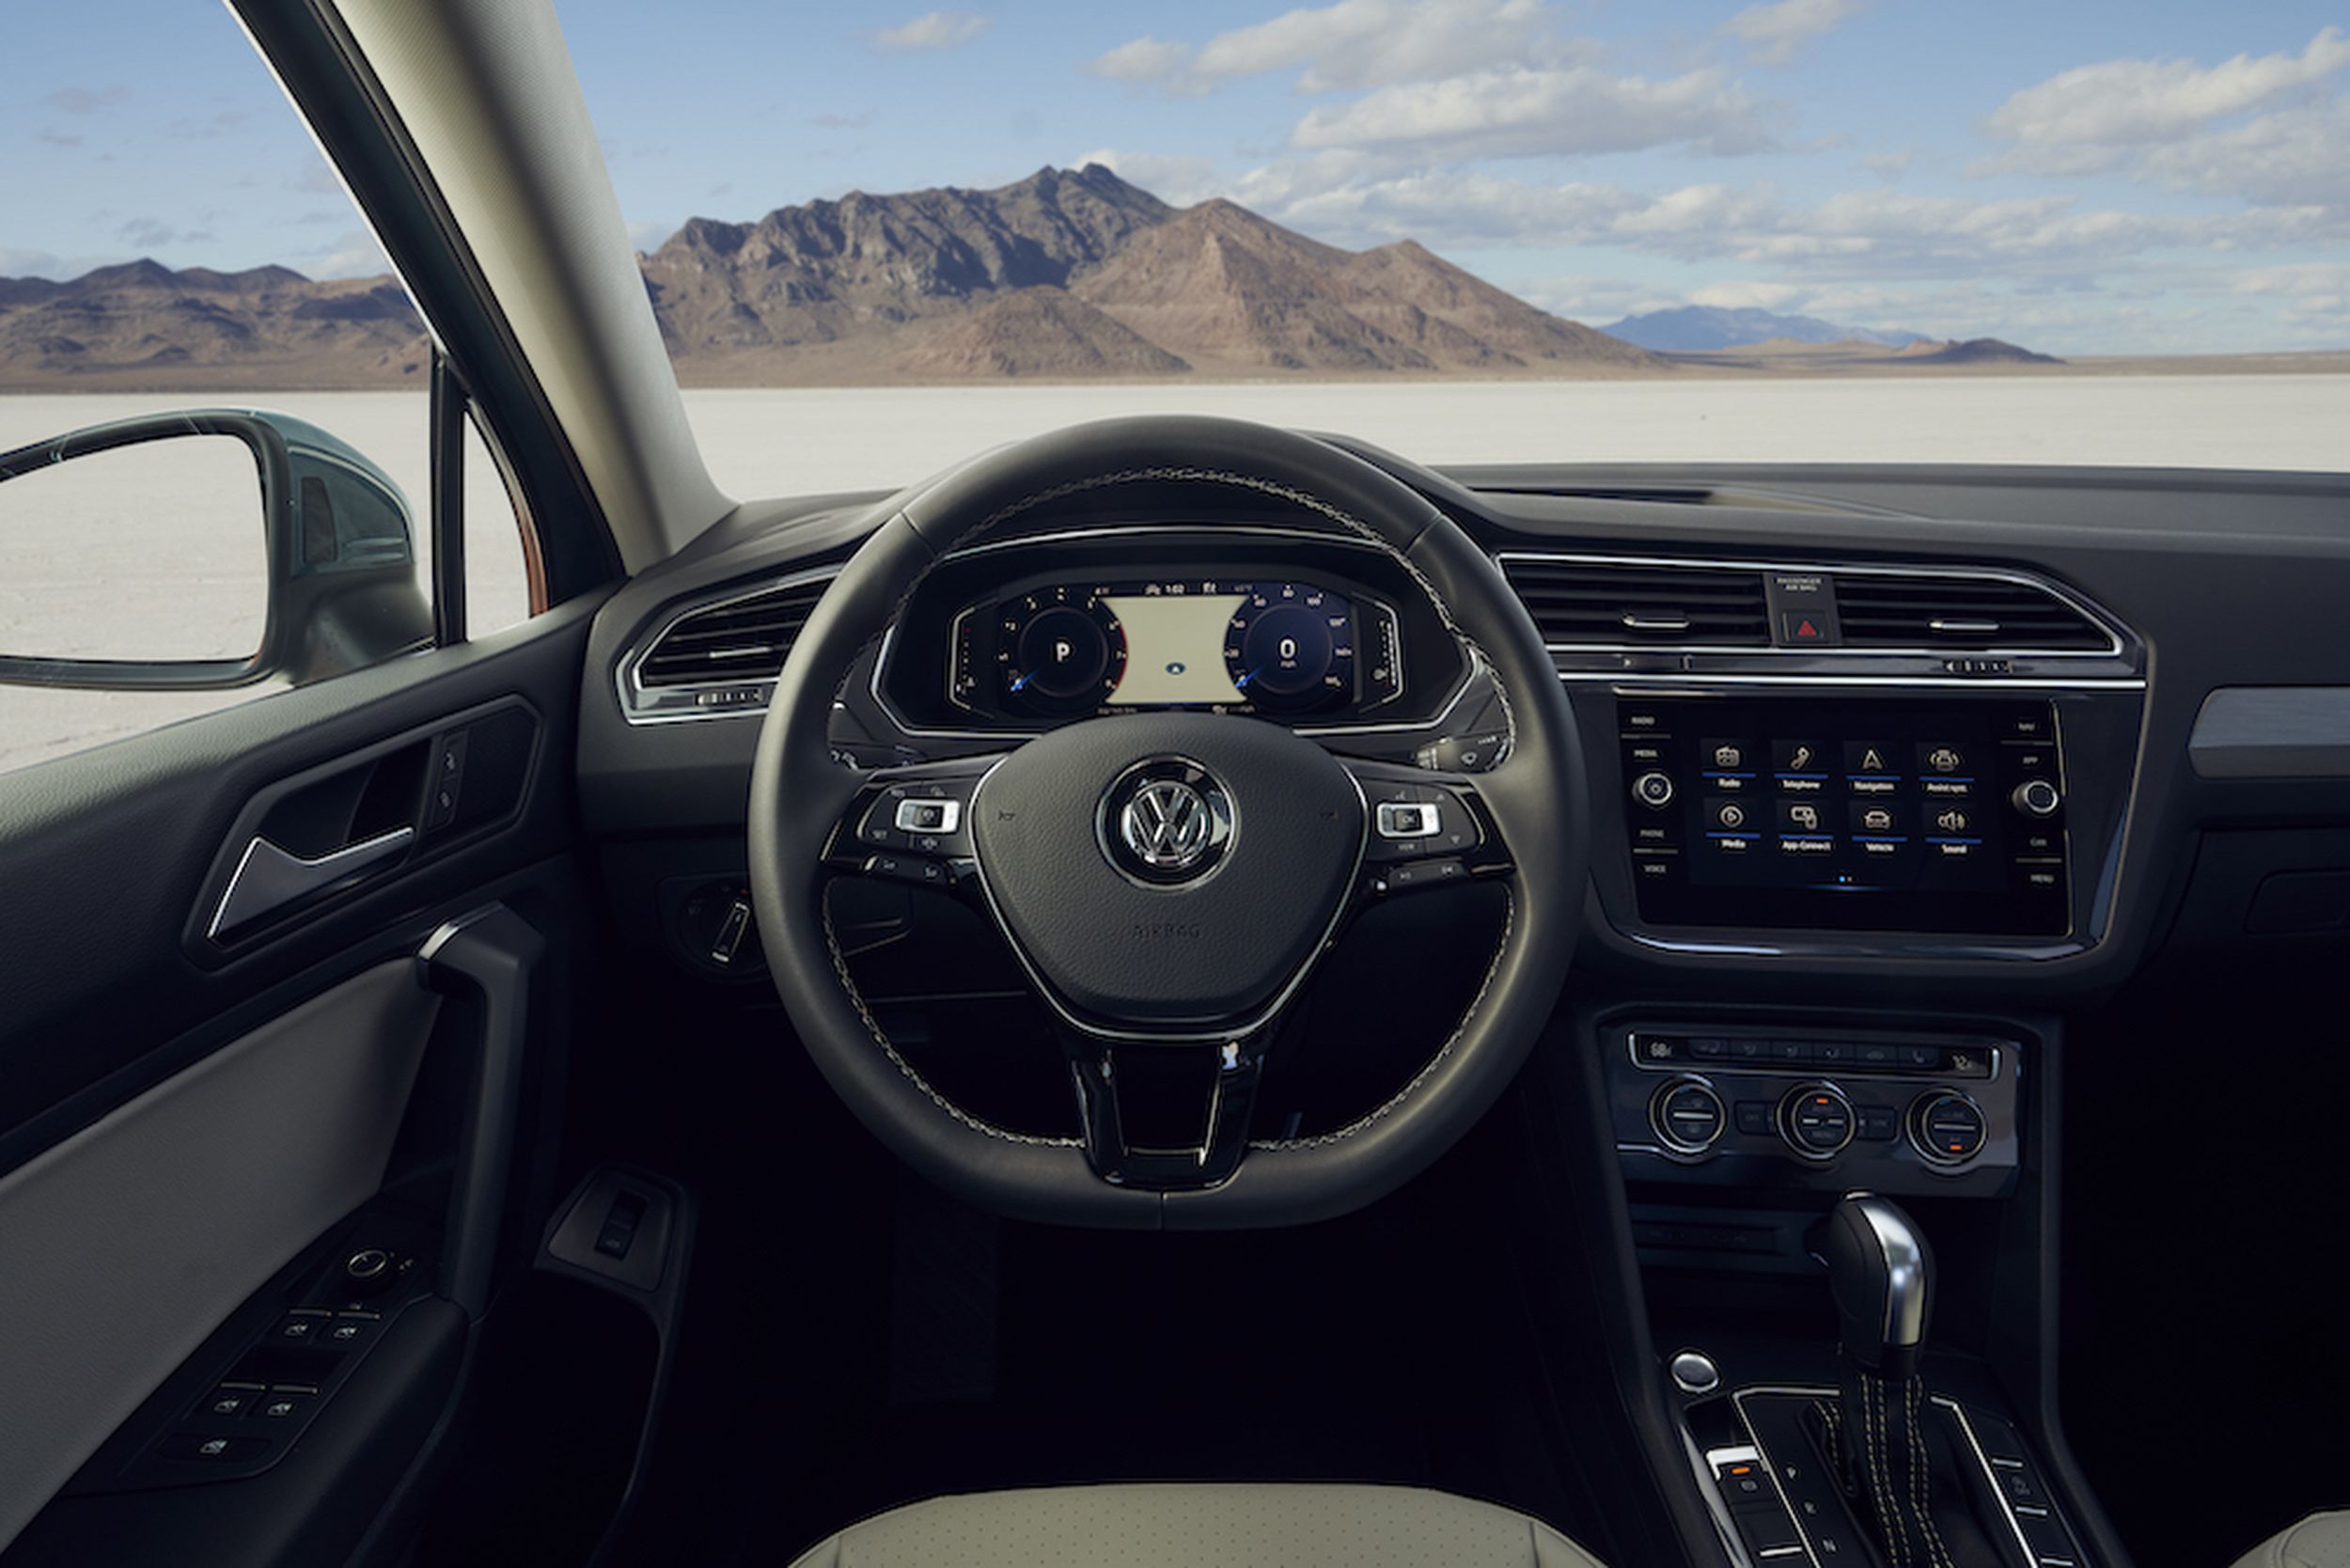 2021 Volkswagen Tiguan: VW tweaks its compact CUV anticipating